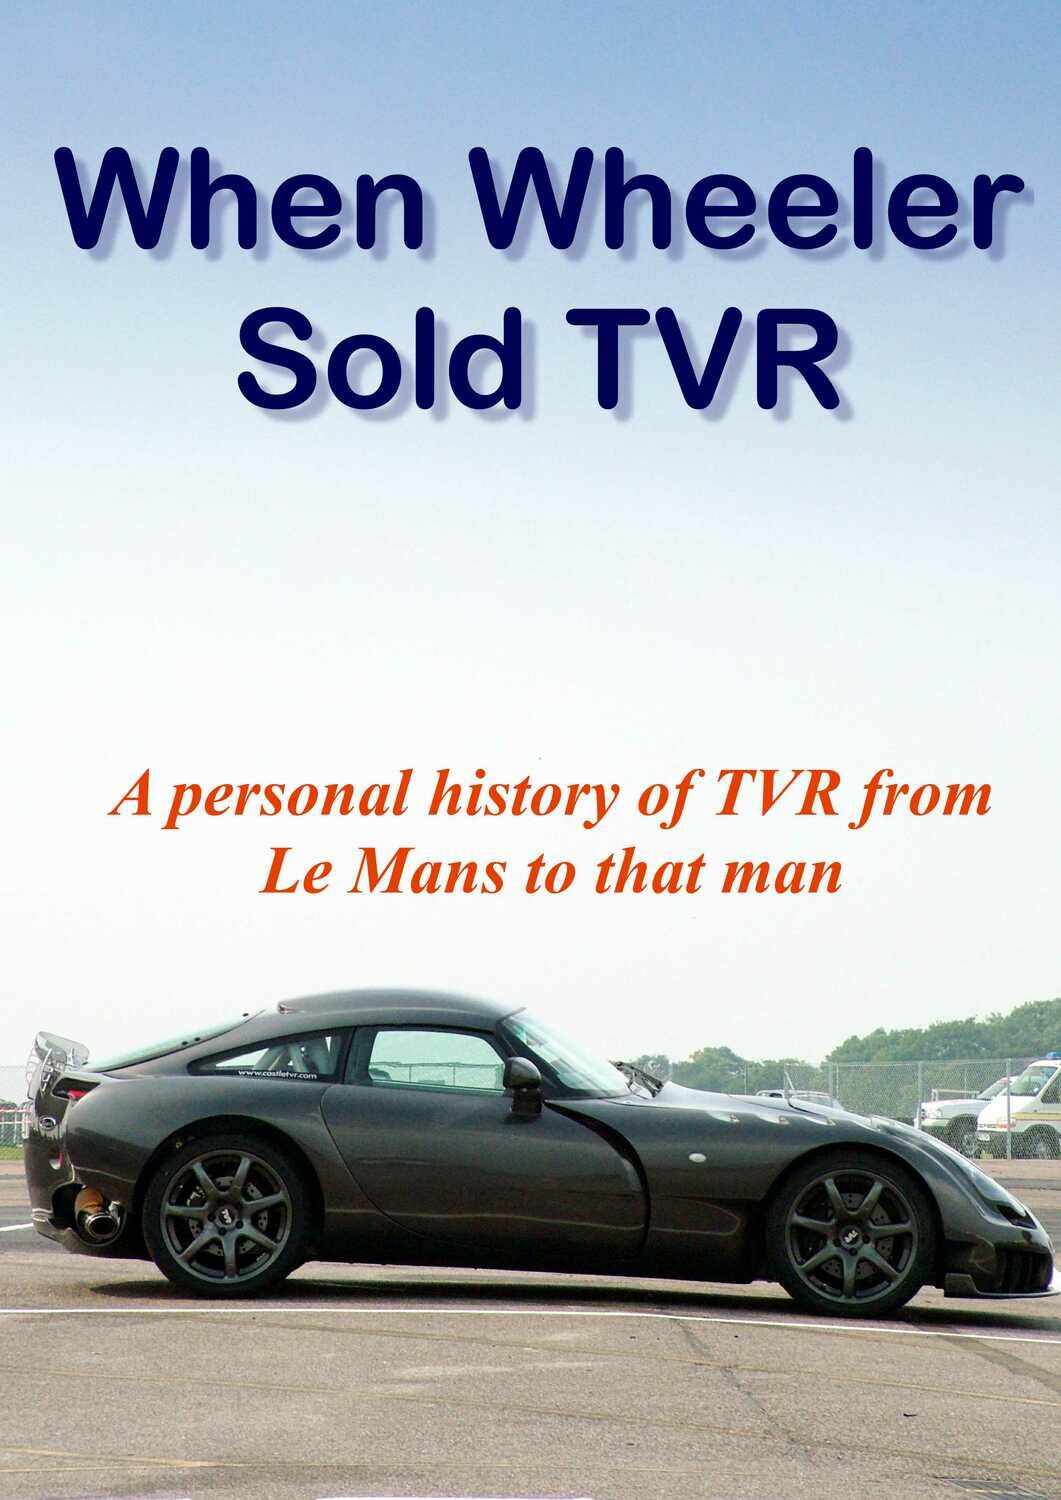 When Wheeler Sold TVR